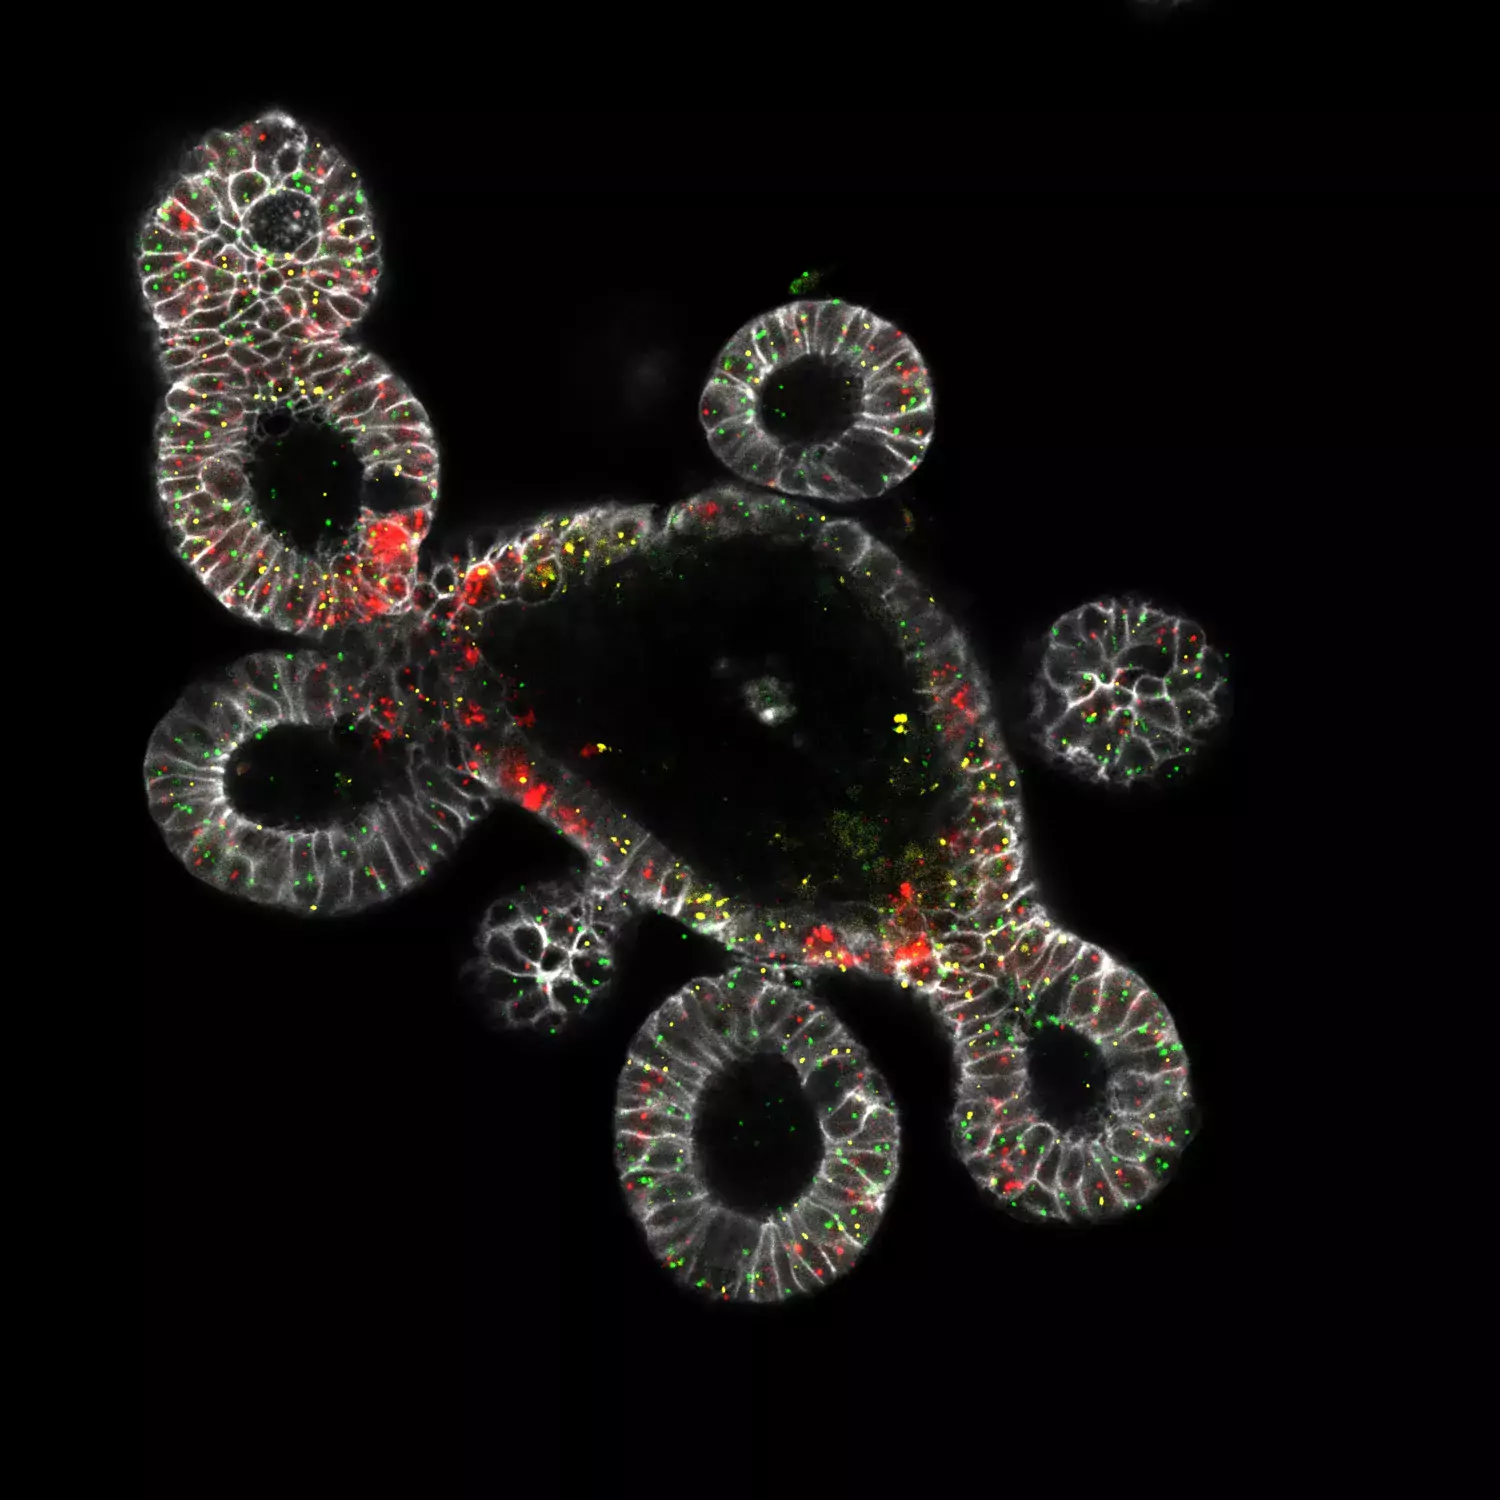 Multiplex RNAscope on Matrigel embedded mouse intestine organoids; 20x magnification.